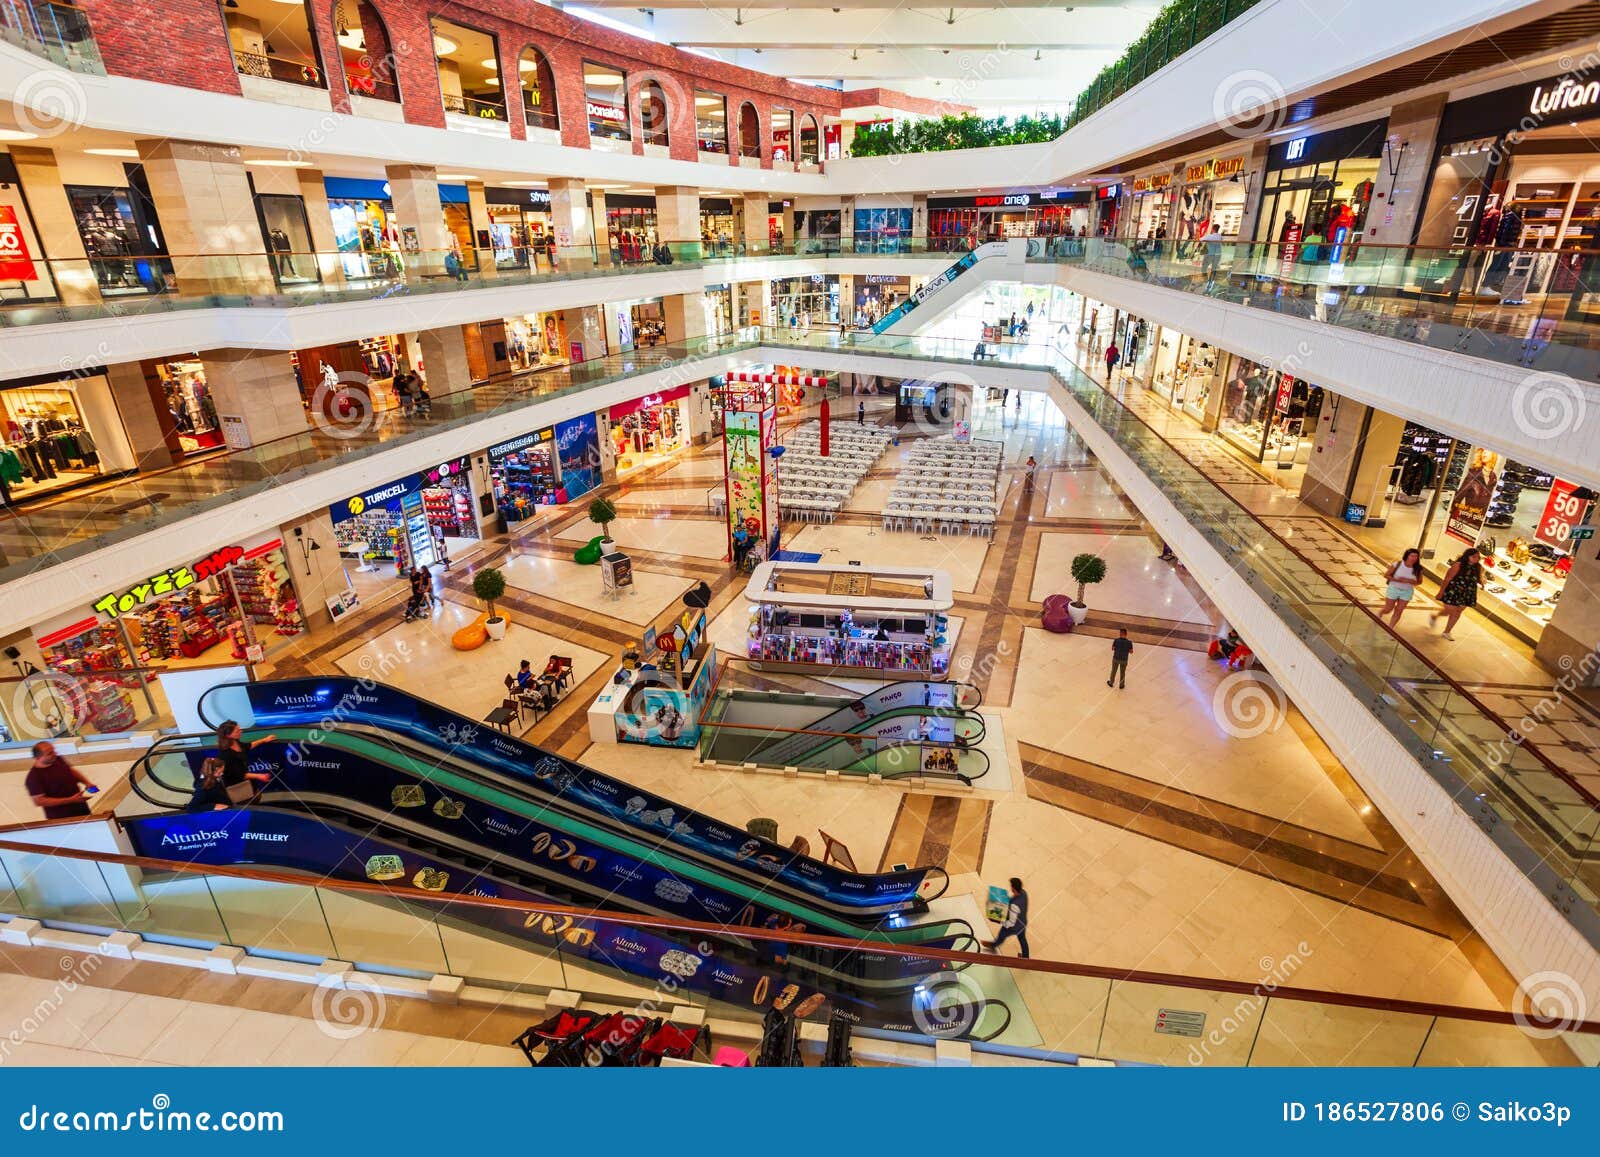 Nova Mall in Manavgat, Turkey Editorial Photo - Image of tourism ...